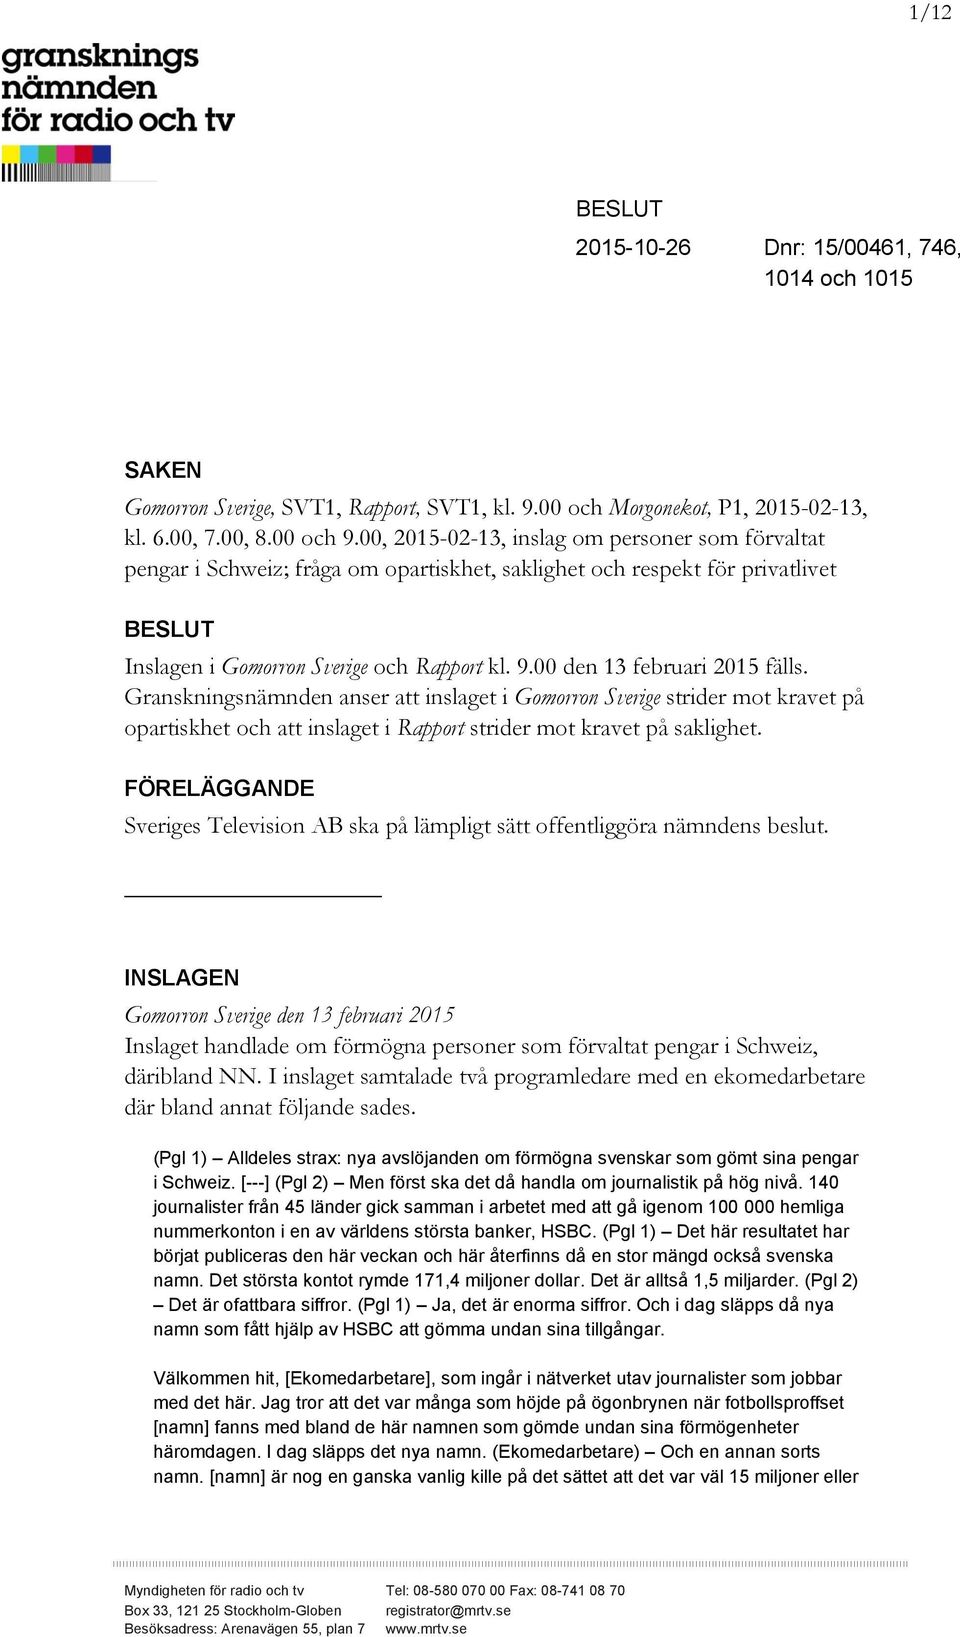 00 den 13 februari 2015 fälls. Granskningsnämnden anser att inslaget i Gomorron Sverige strider mot kravet på opartiskhet och att inslaget i Rapport strider mot kravet på saklighet.